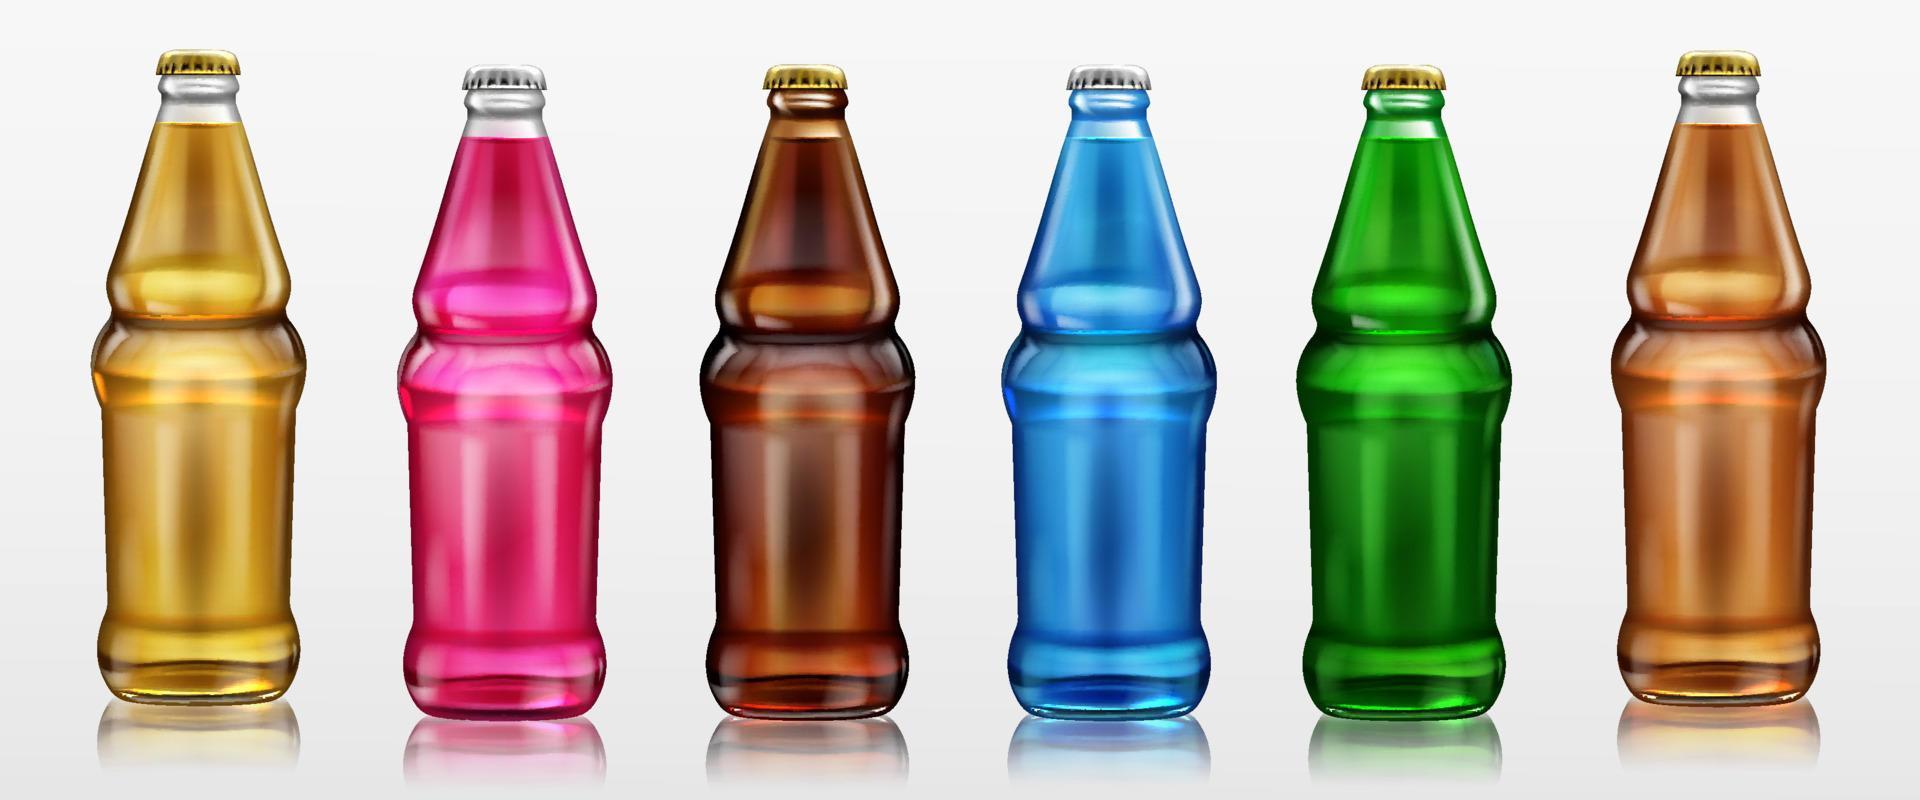 Glass bottles with drinks, beer, soda and lemonade vector